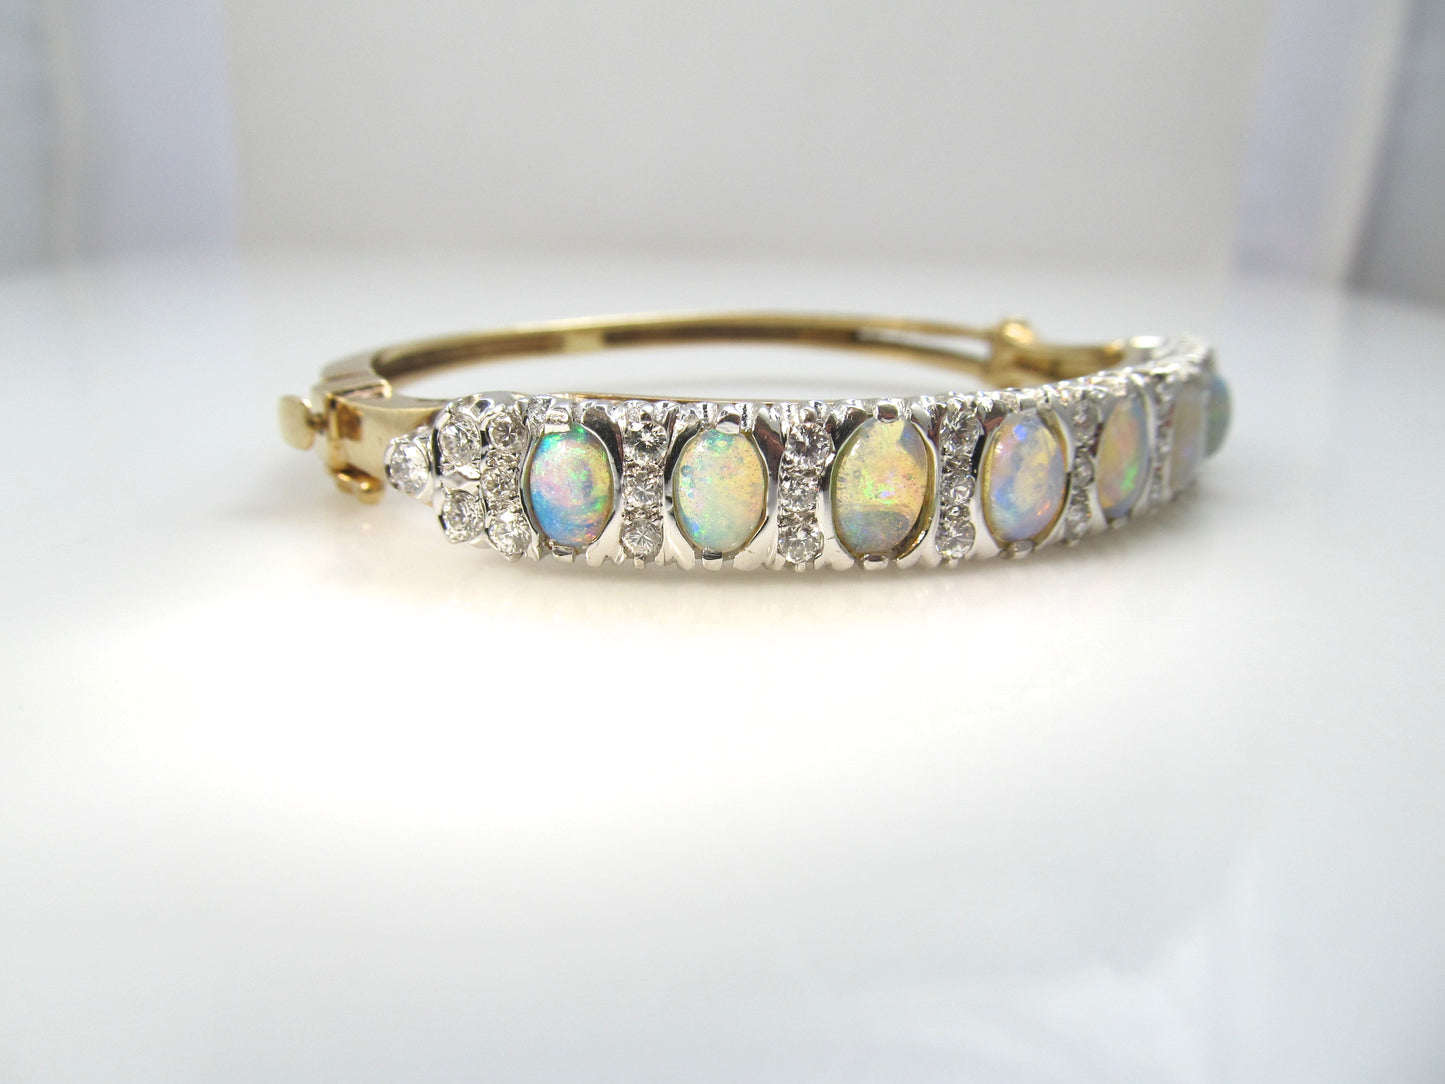 Outstanding vintage 3.00ct opal diamond bangle bracelet